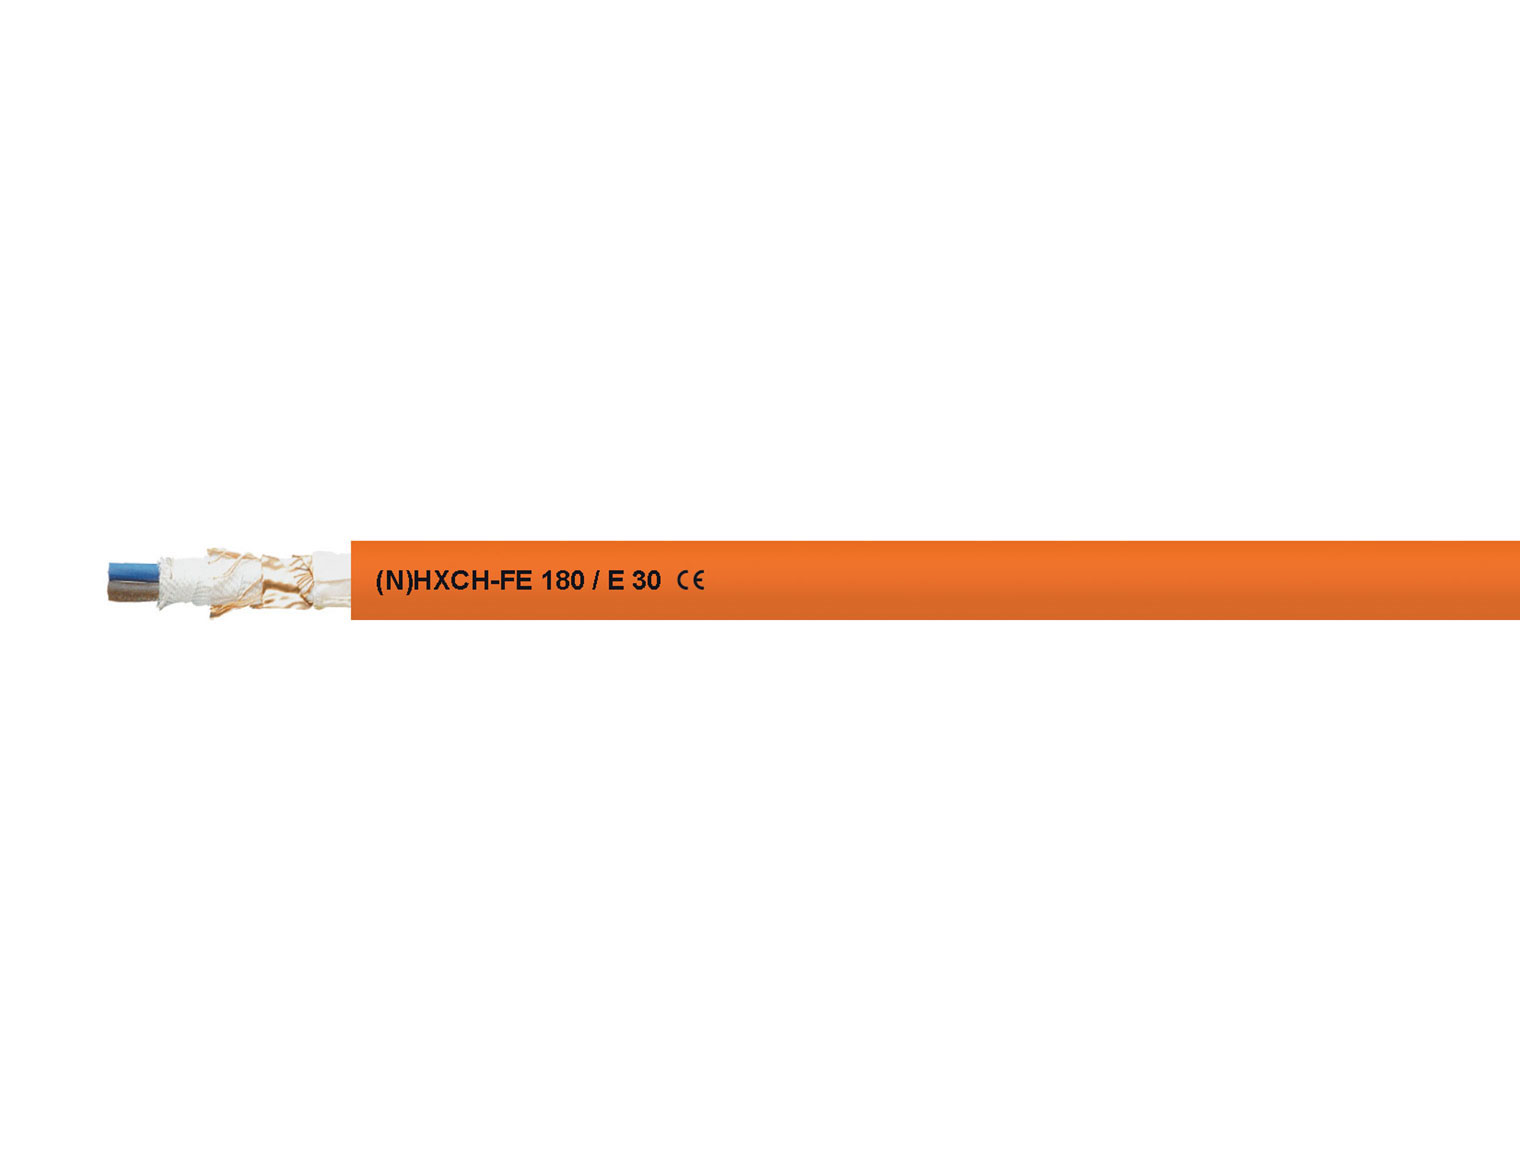 N)HXCH-FE 180/E 30 orange 4 x 120 / 70 rm mm²